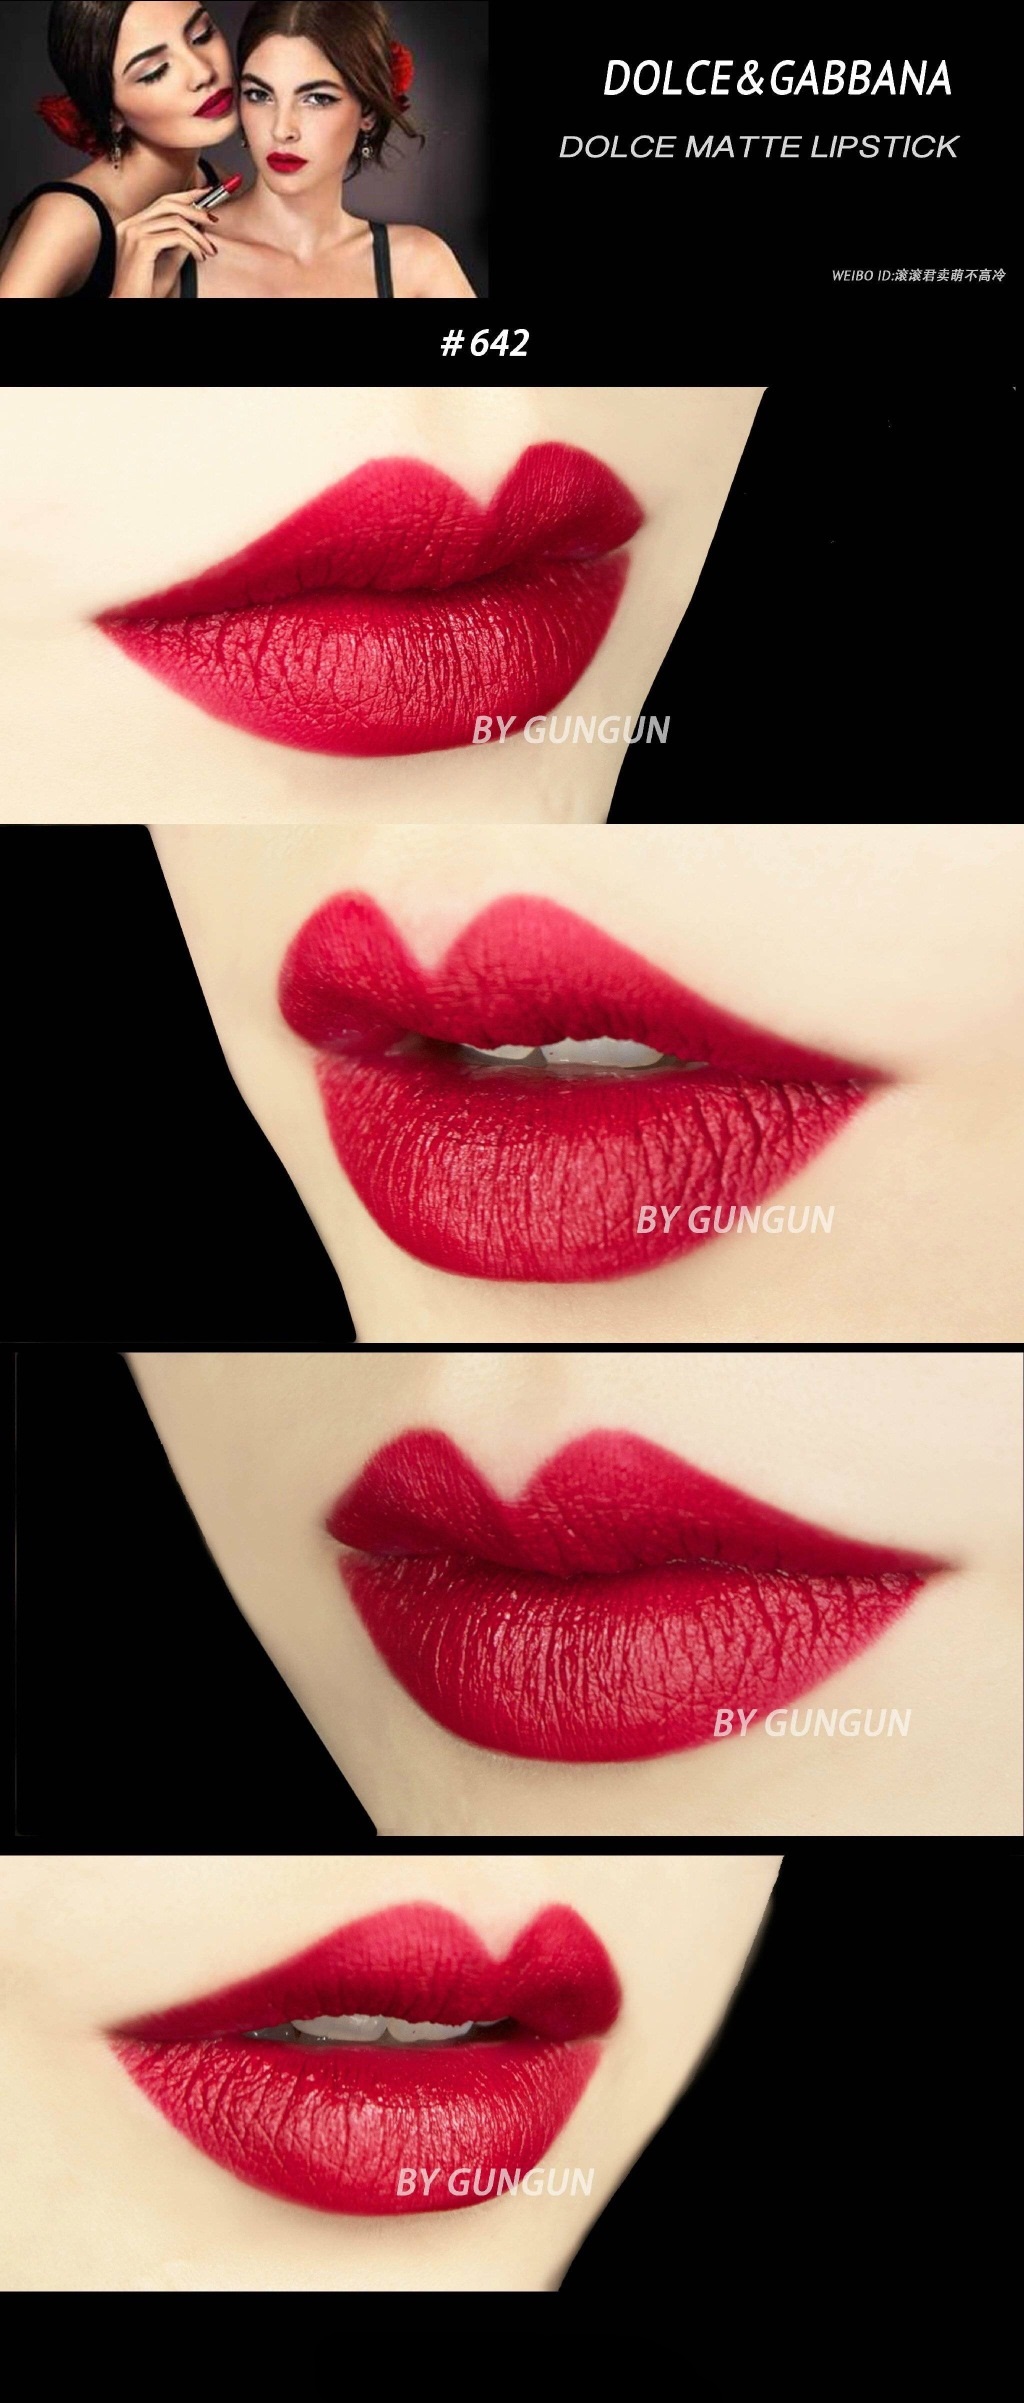 Dolce&Gabbana 杜嘉班纳唇膏dolce matte lipstick 621/531/642/624/629/643/644试色